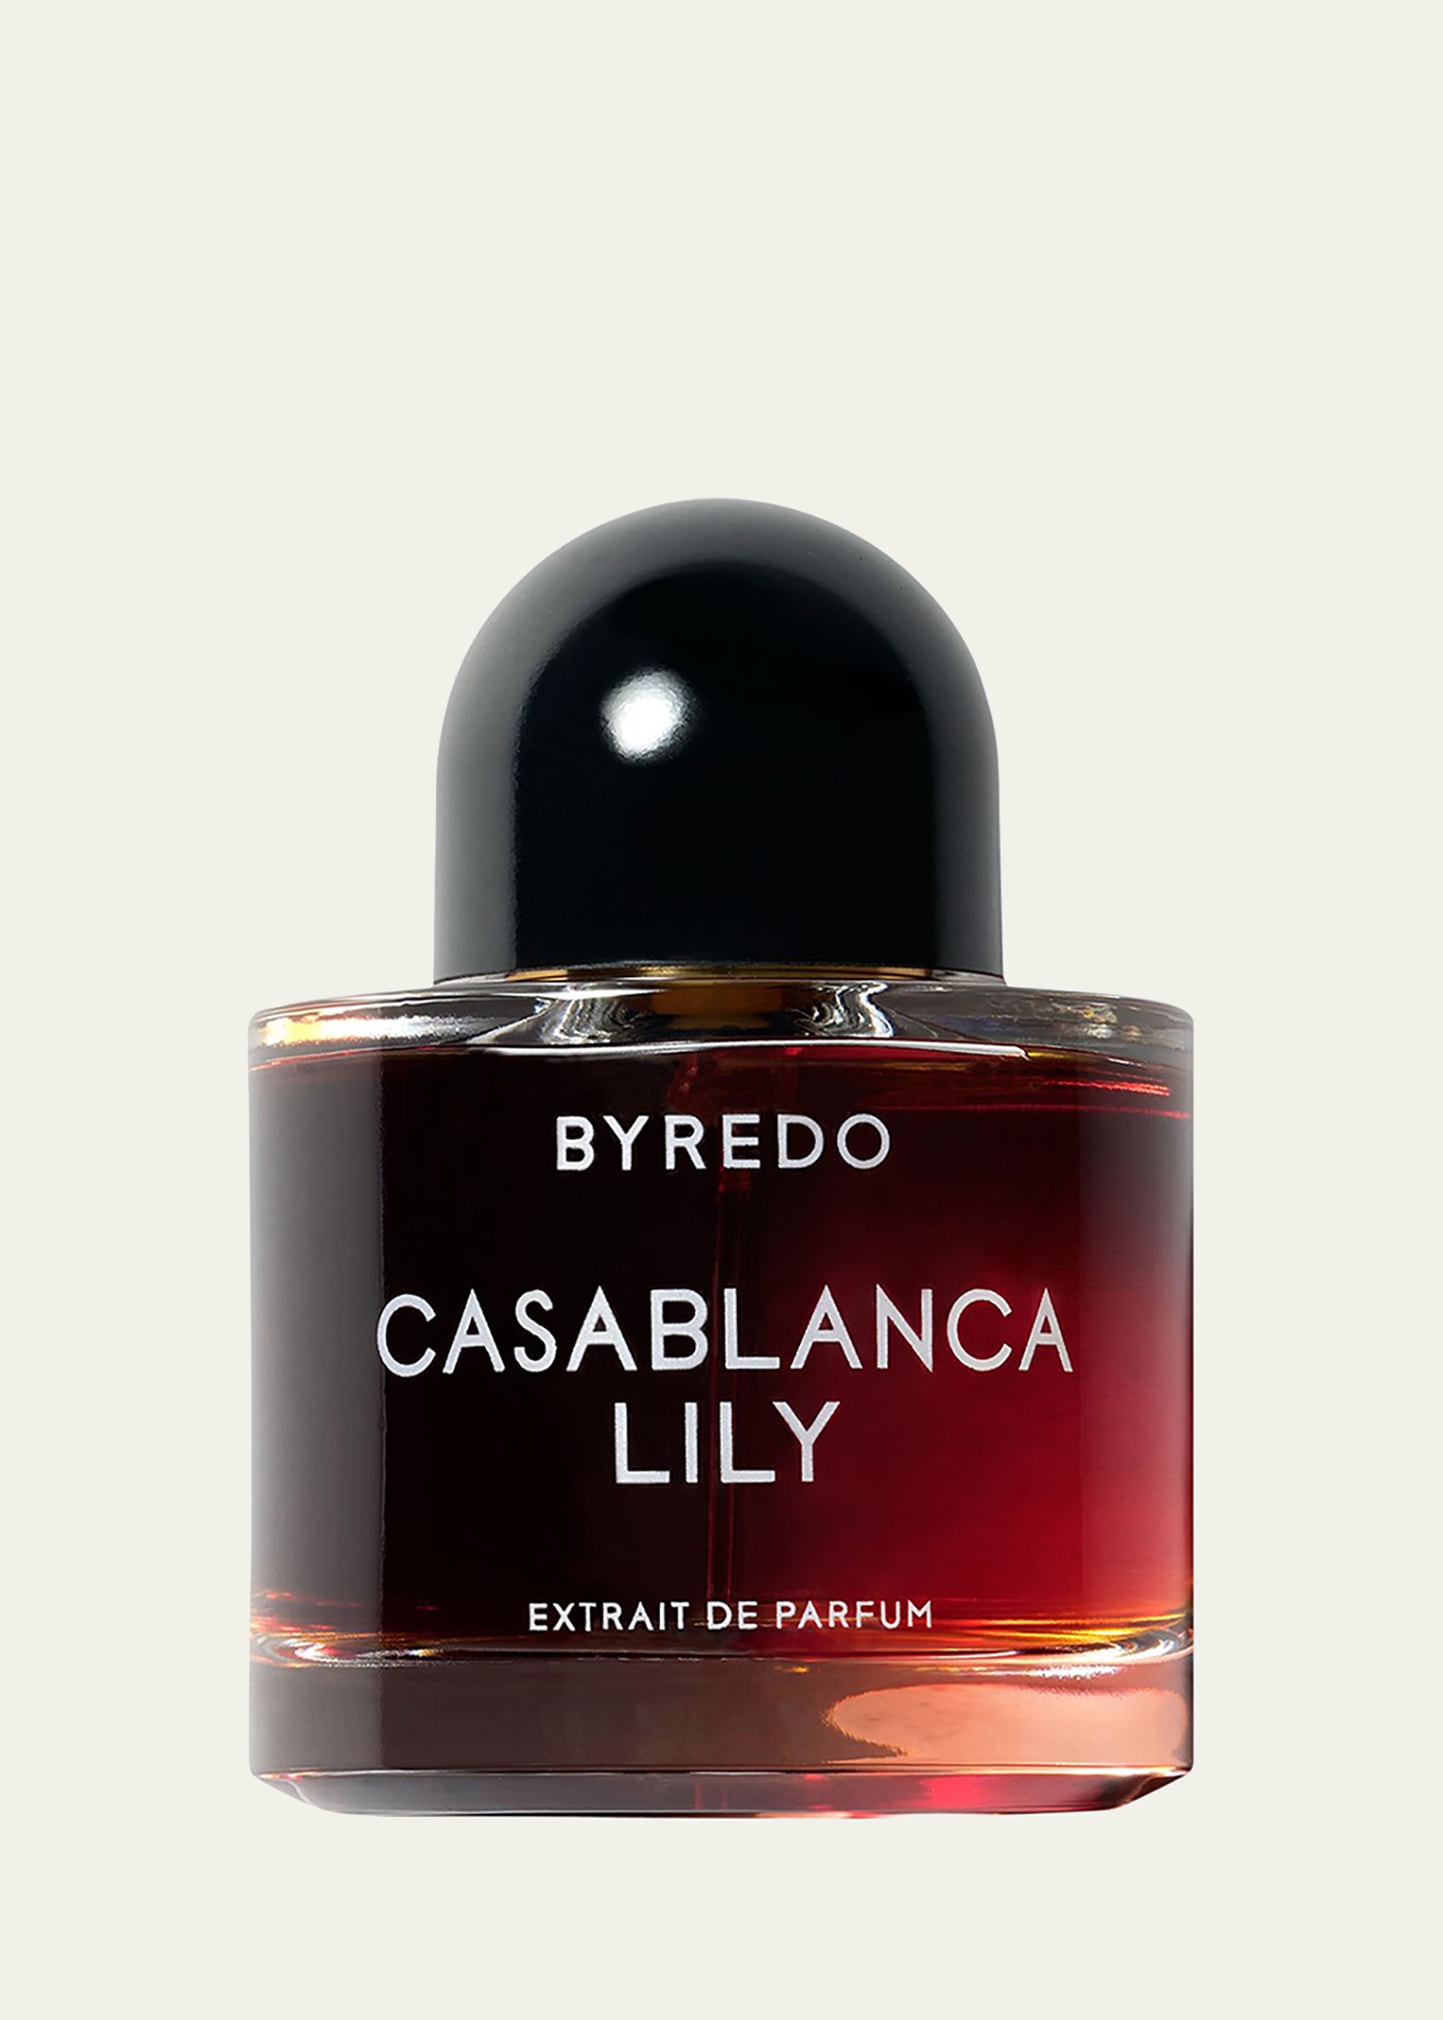 Casablanca Lily Night Veils Eau de Parfum, 1.7 oz.